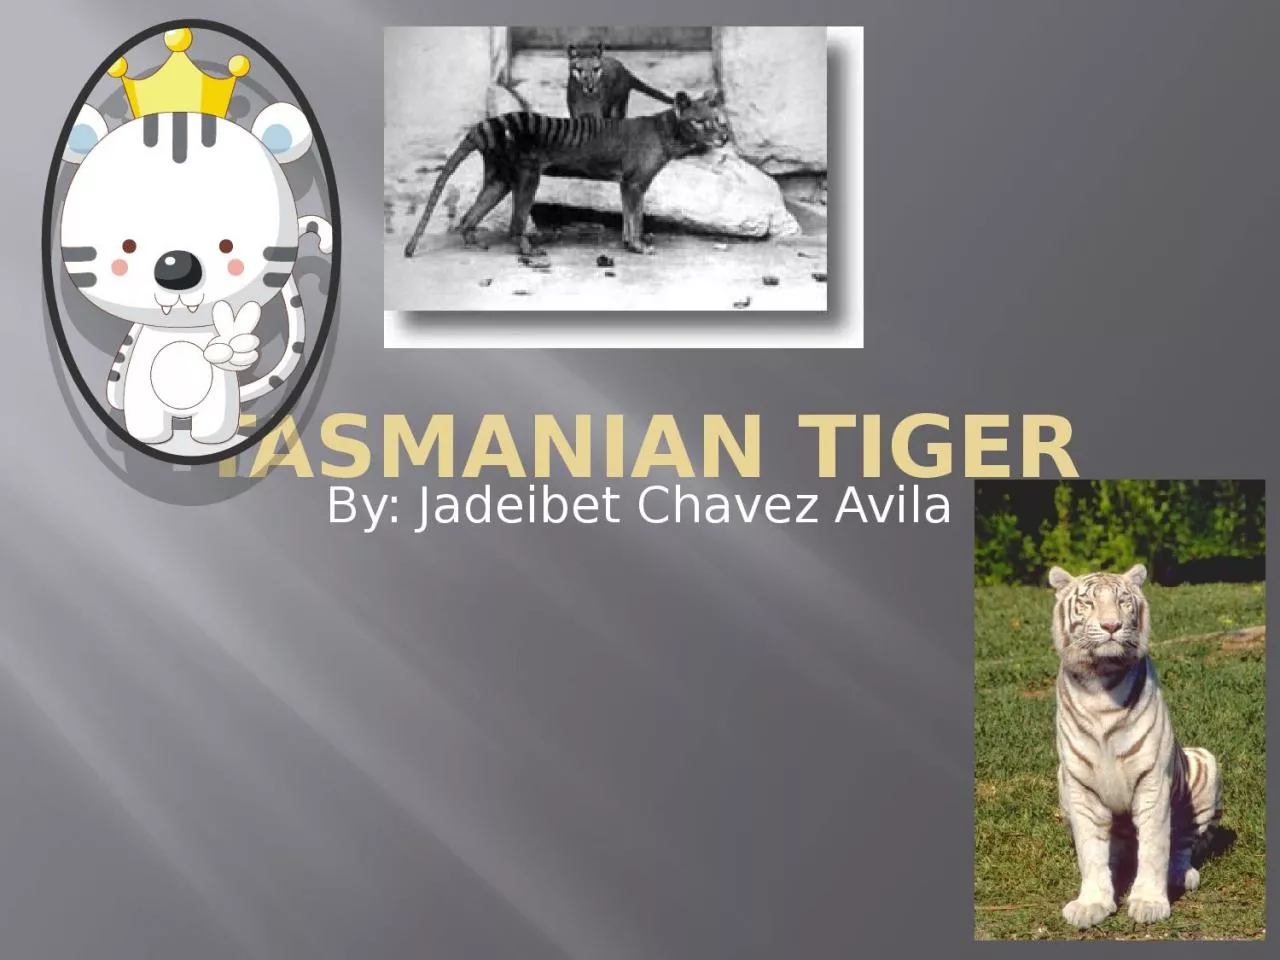 Tasmanian Tiger By: Jadeibet Chavez Avila